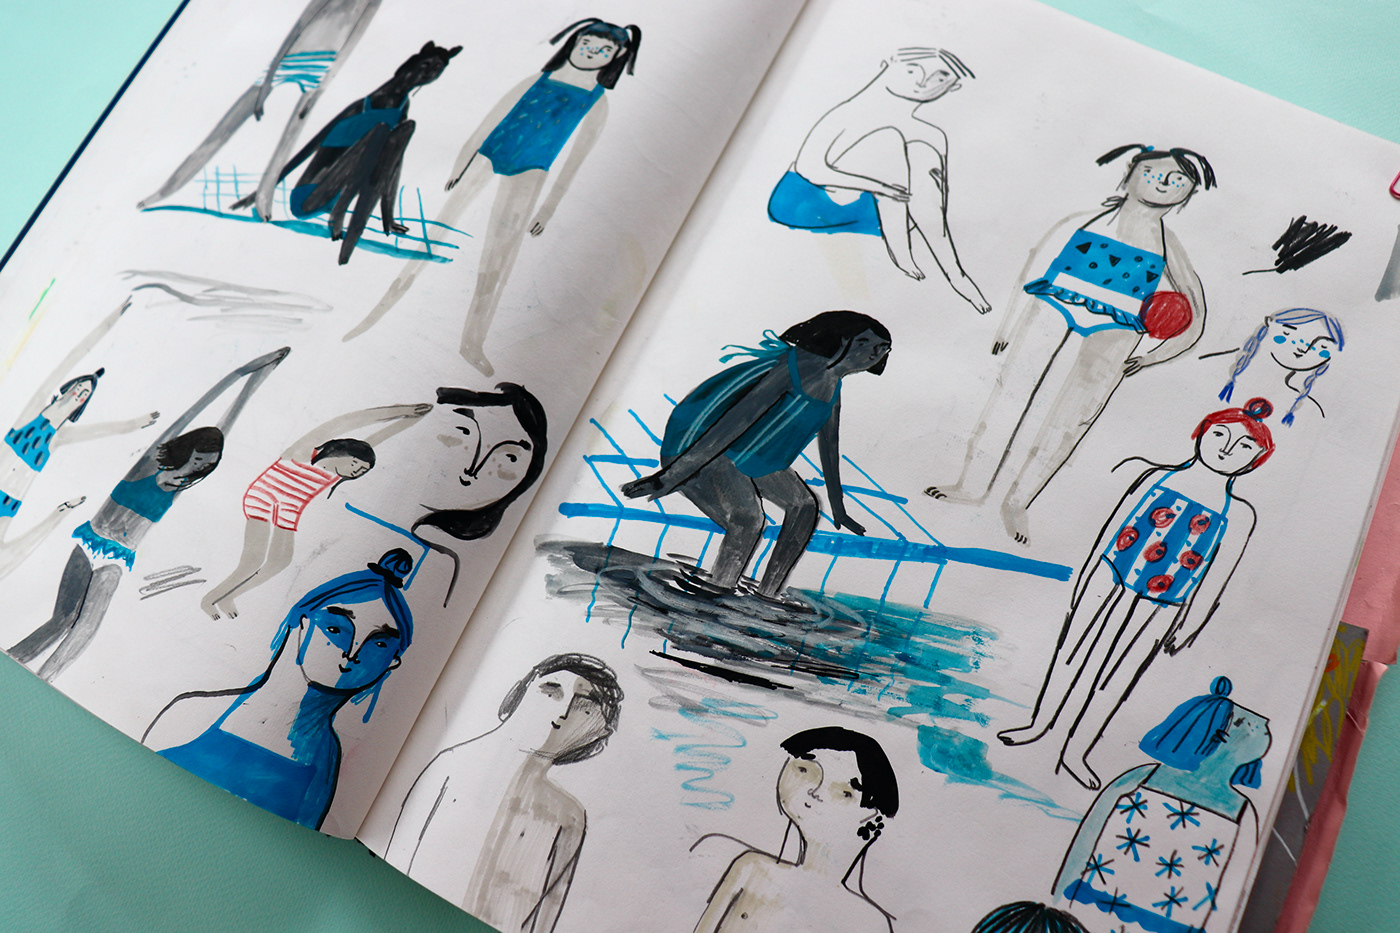 children illustration childrens book crayon picturebook process sketchbook summer swimming pool